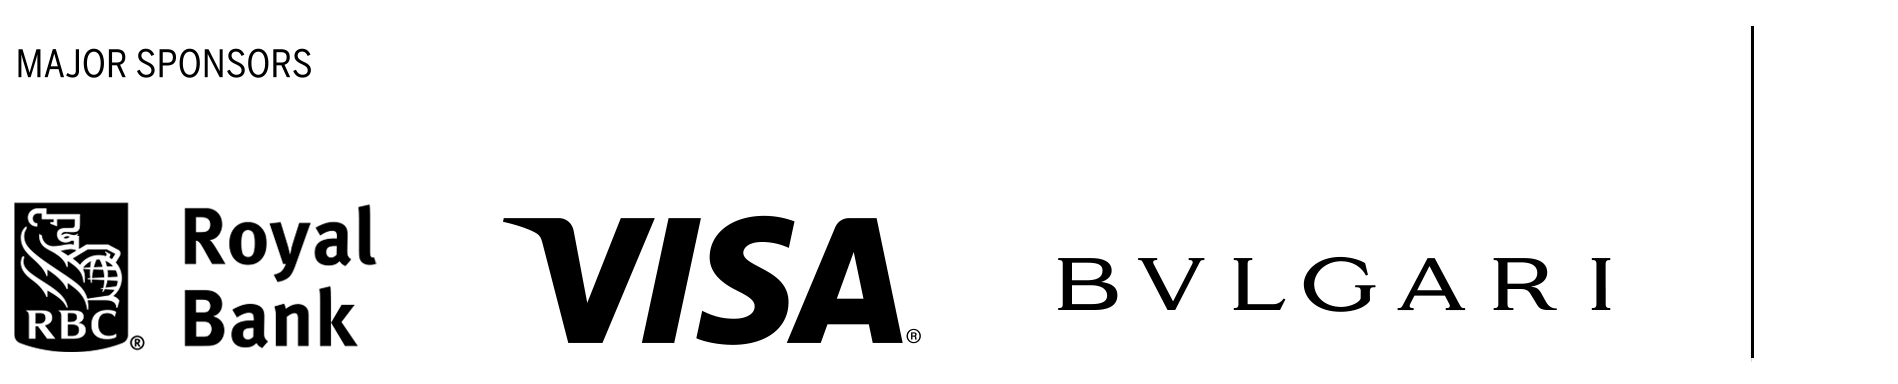 RBC, Loreal, Visa sponsor logo